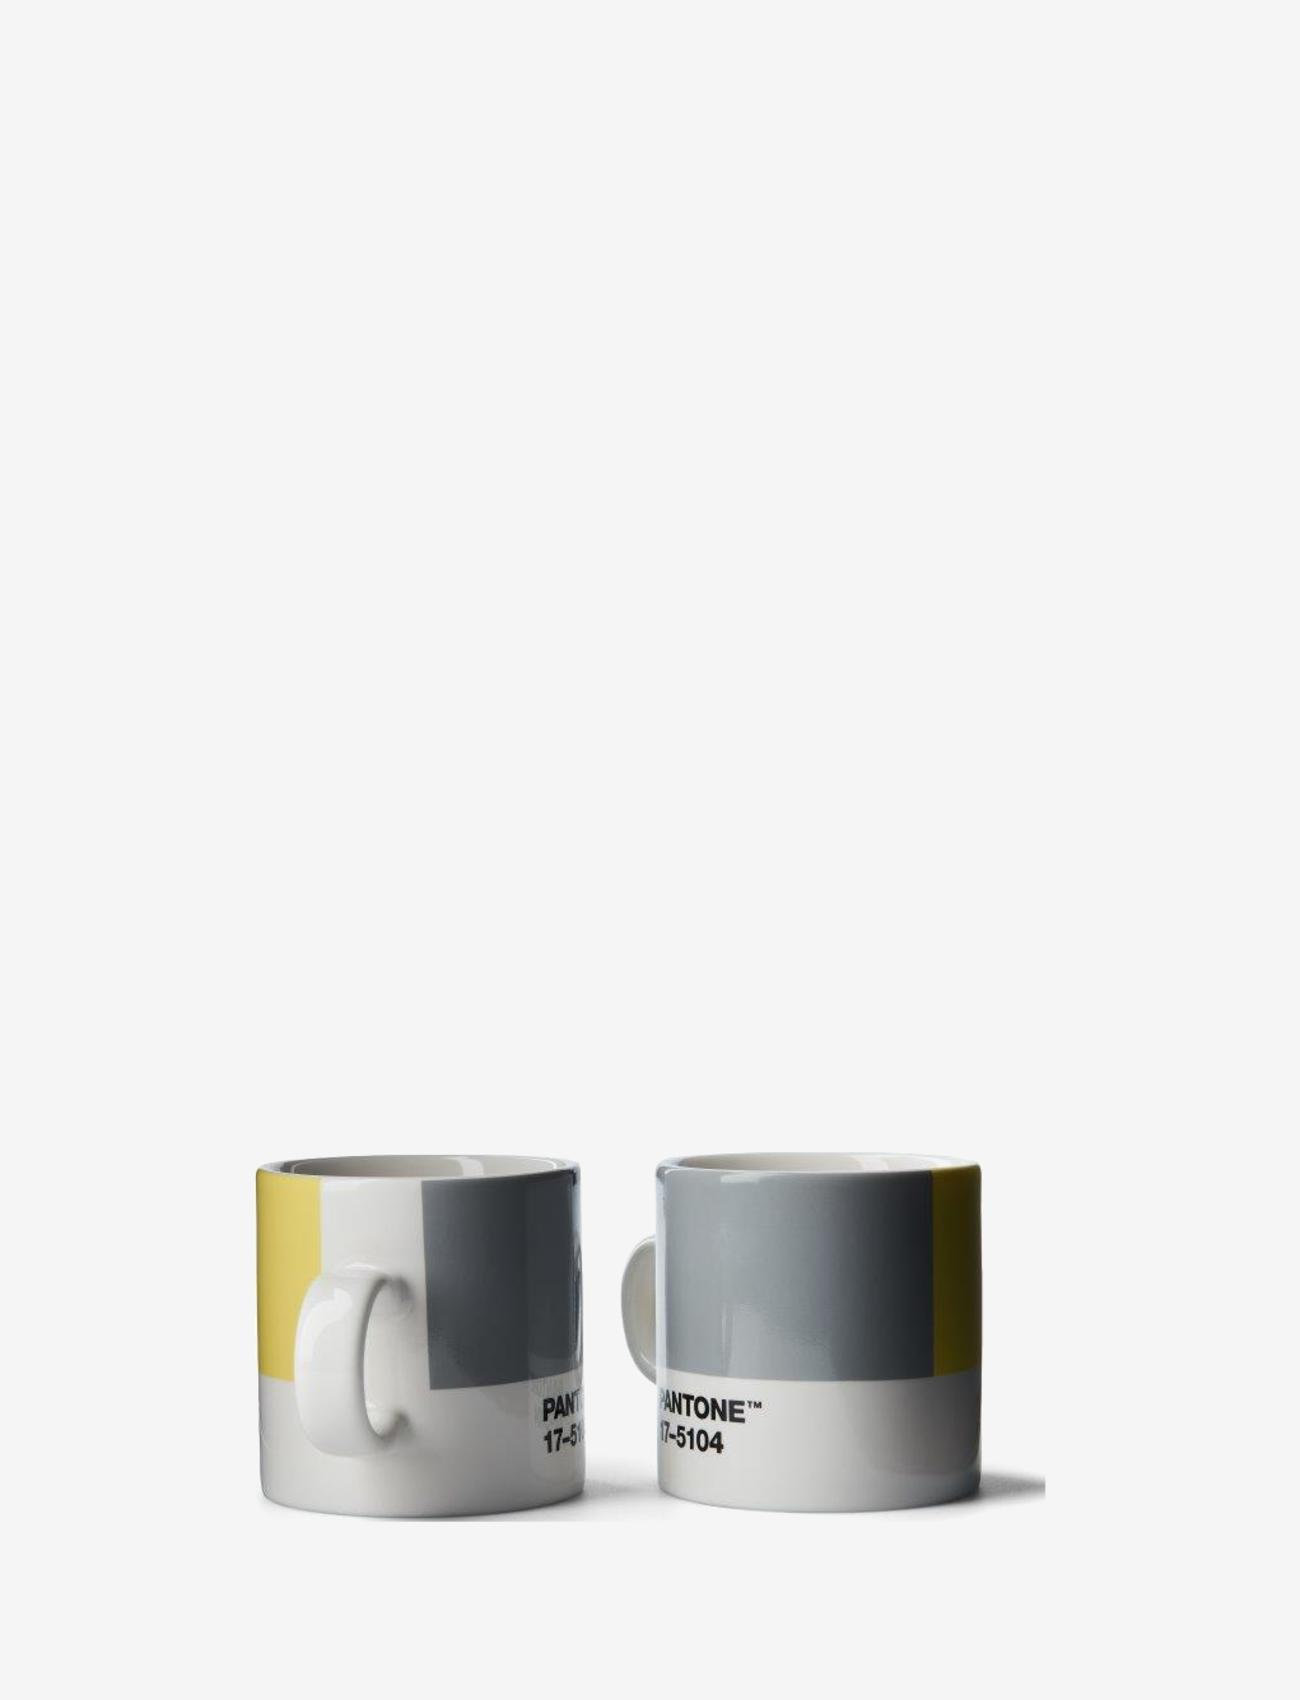 COY21 Copenhagen Design PANTONE Espresso Cups 4 pcs In Gift Box One Size